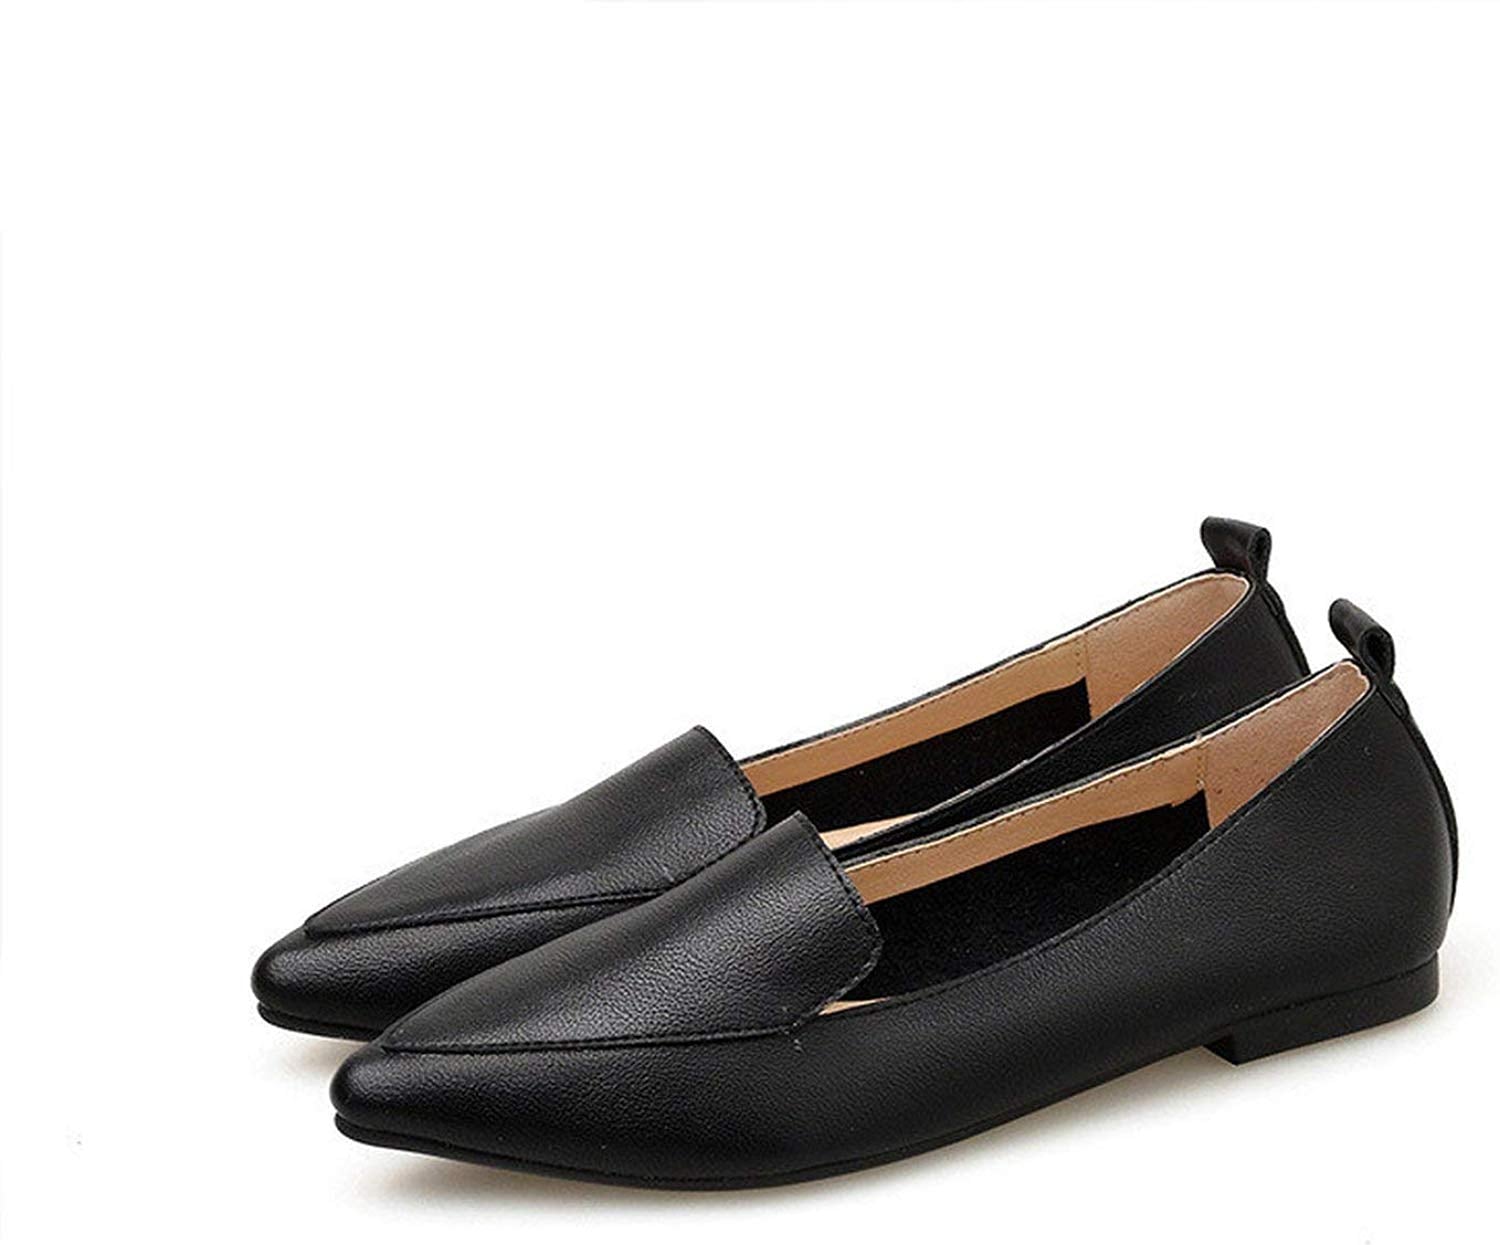 mango pointed toe leather shoes